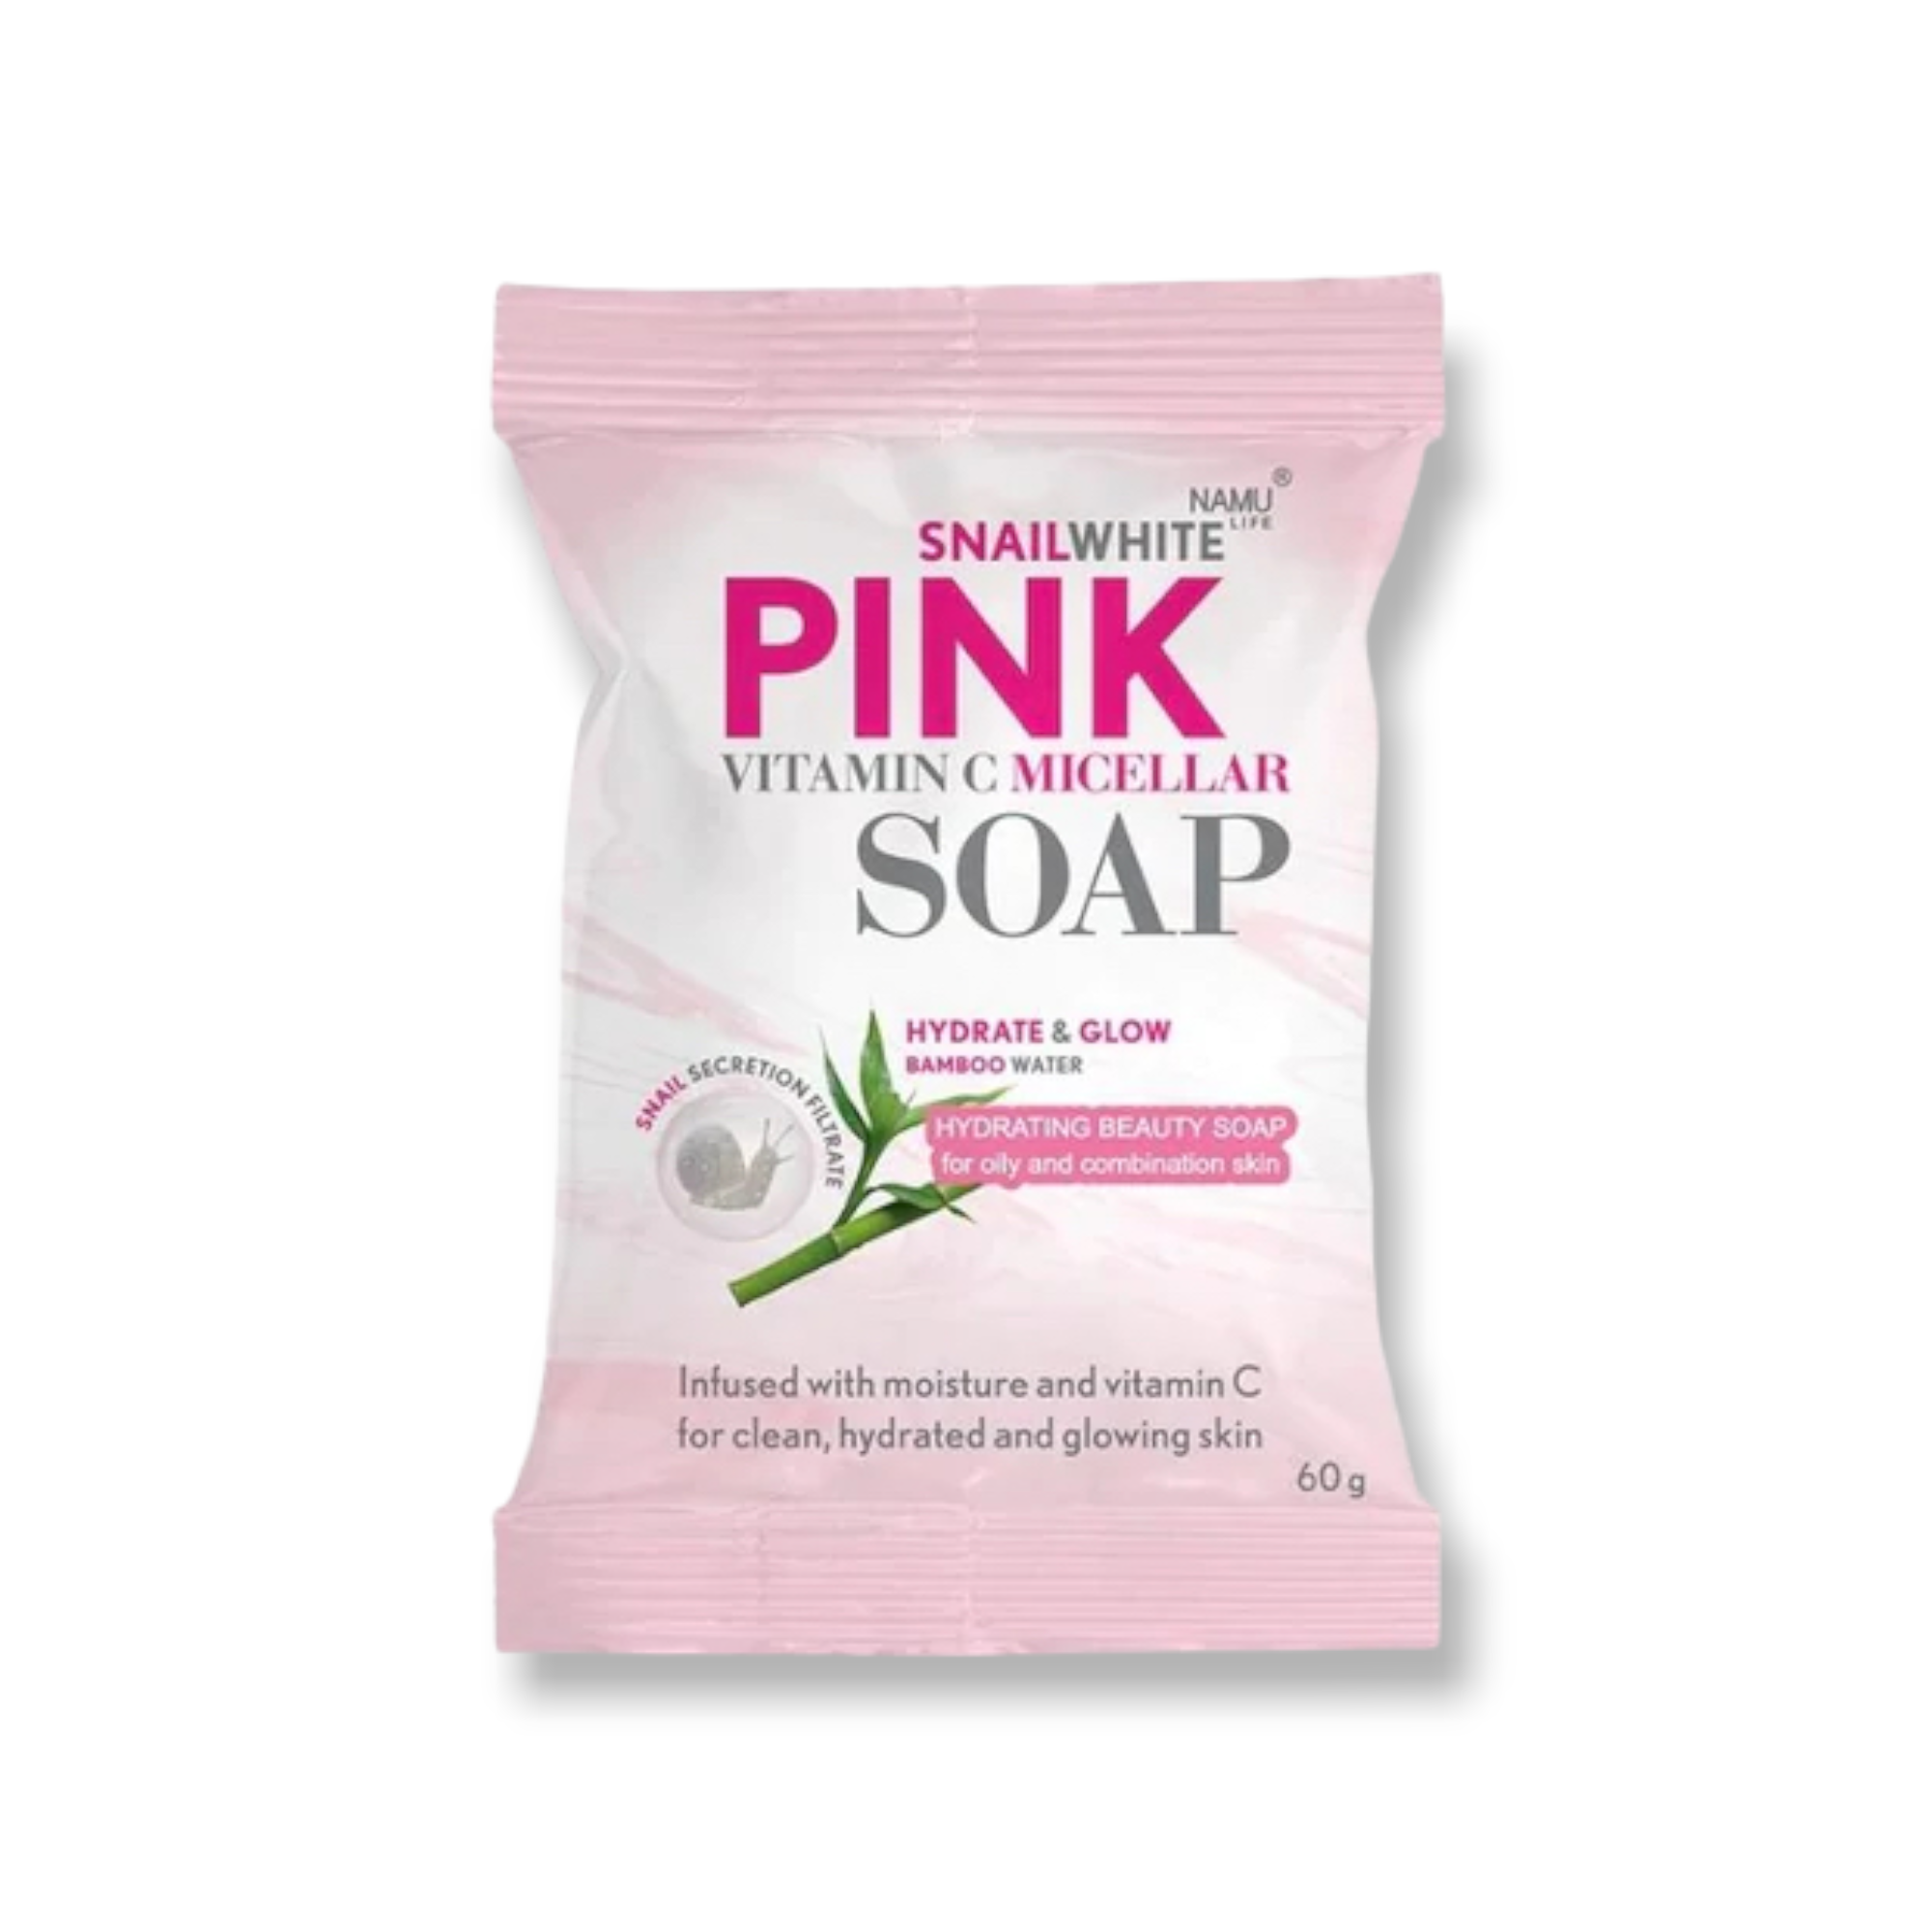 SnailWhite Pink Vitamin C Micellar Soap 60g